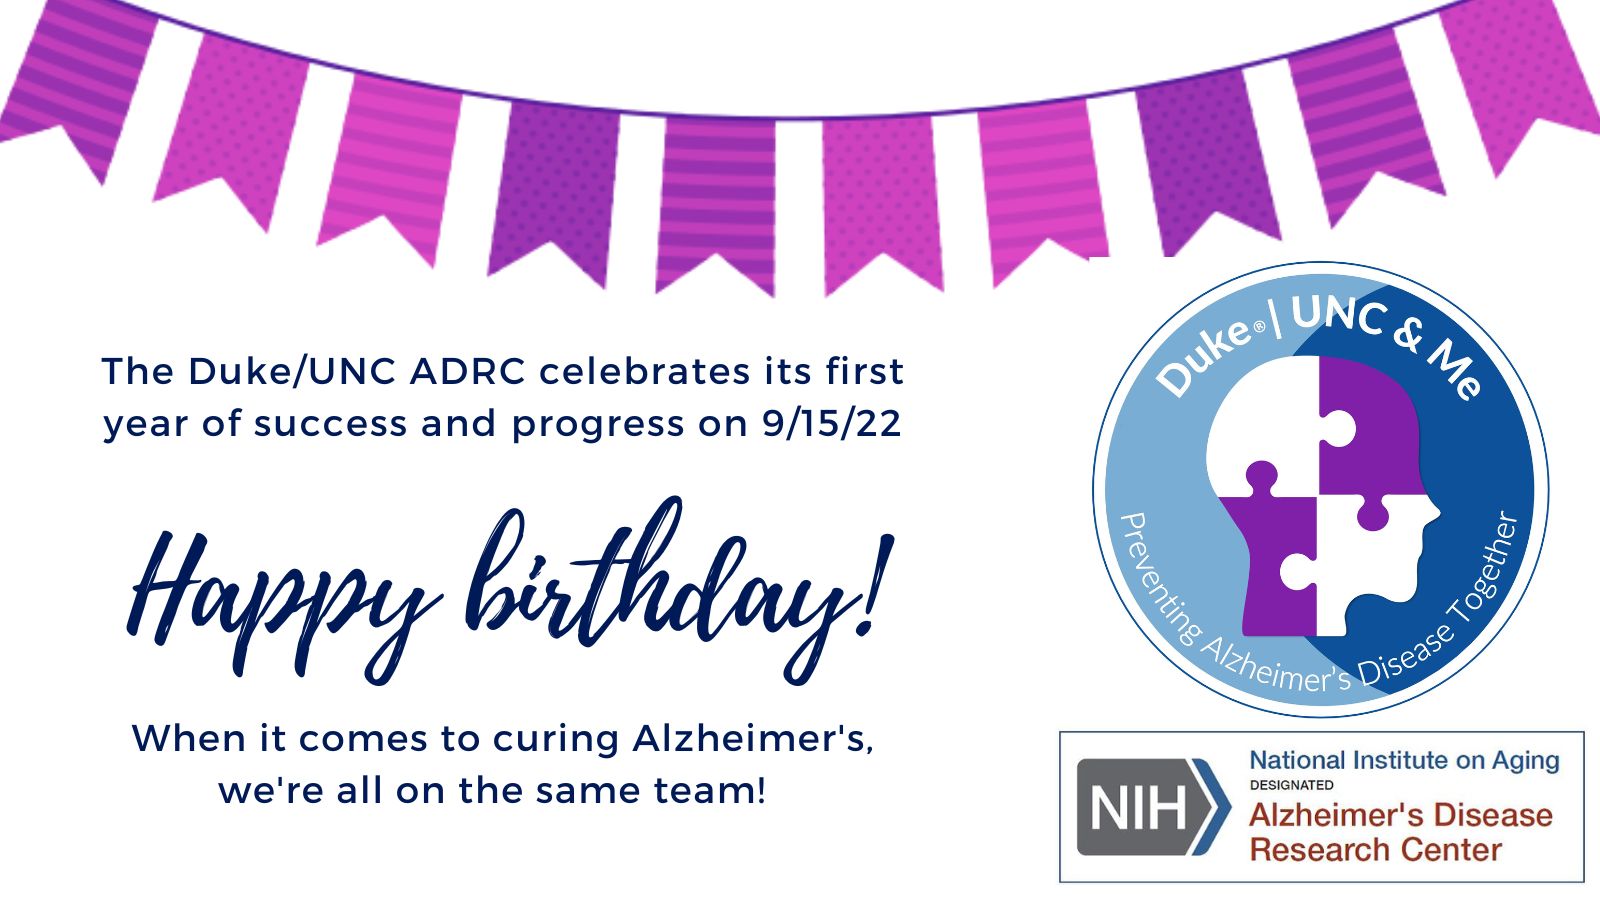 Happy first birthday, Duke/UNC ADRC